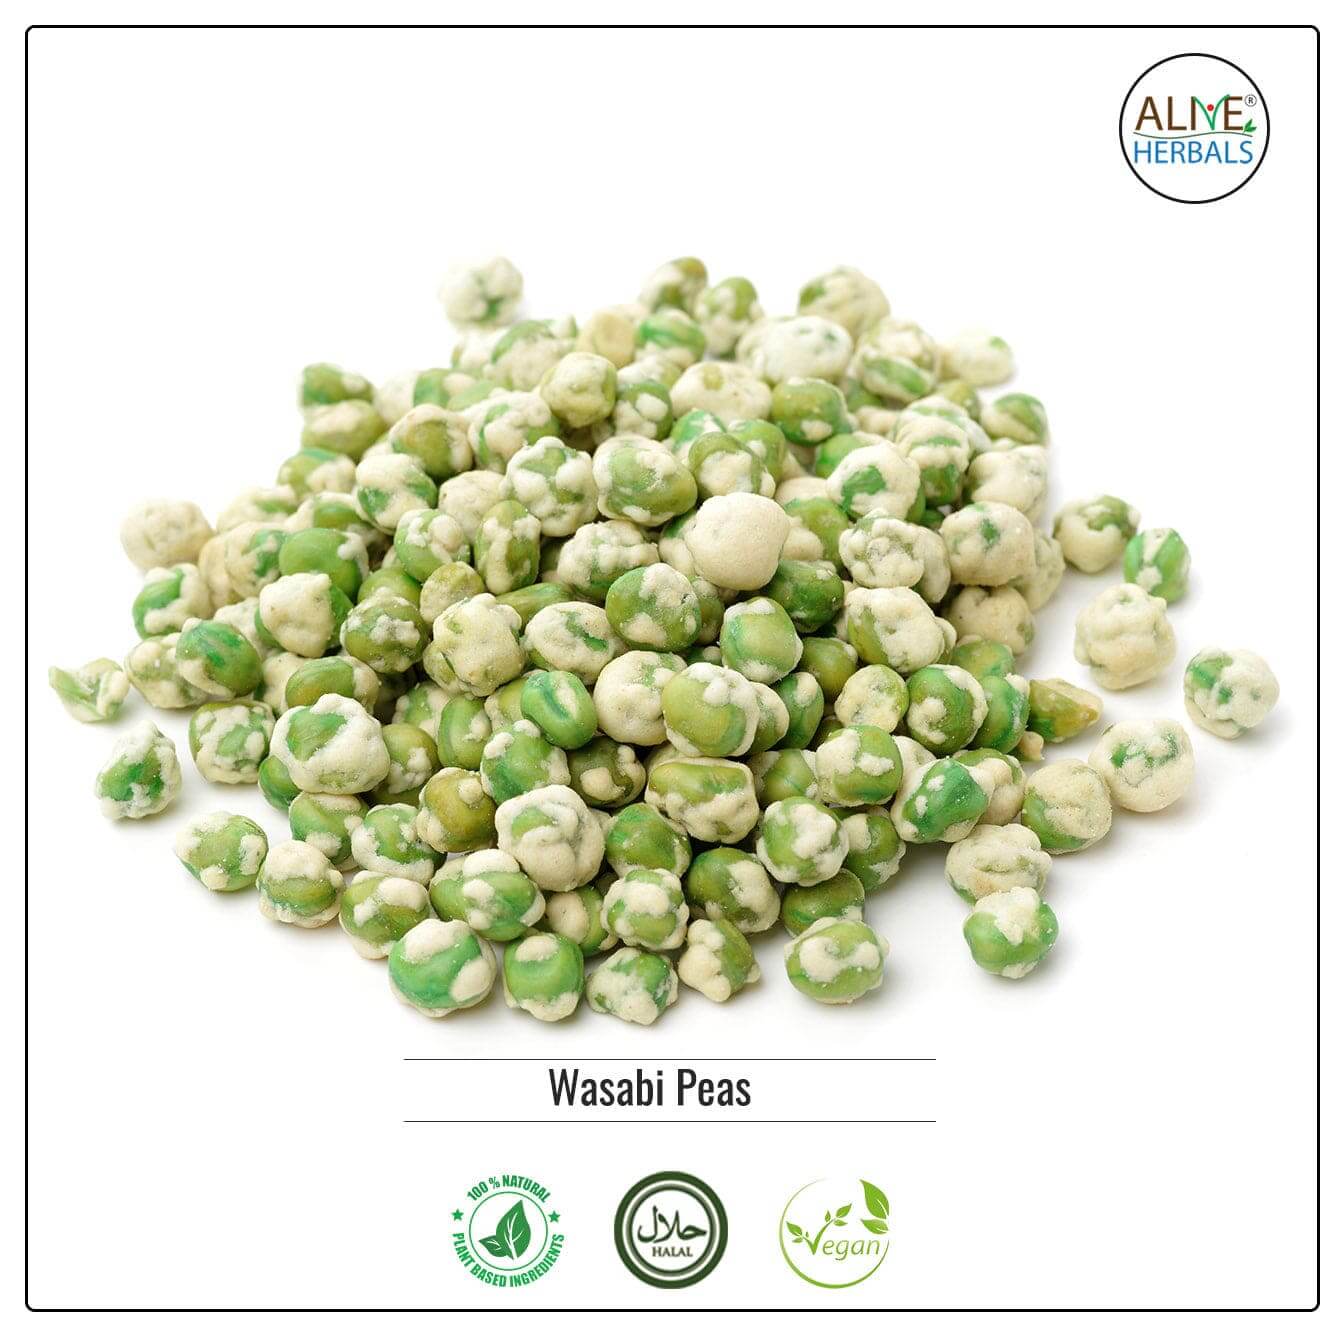 Wasabi green peas - Buy at Natural Food Store | Alive Herbals.